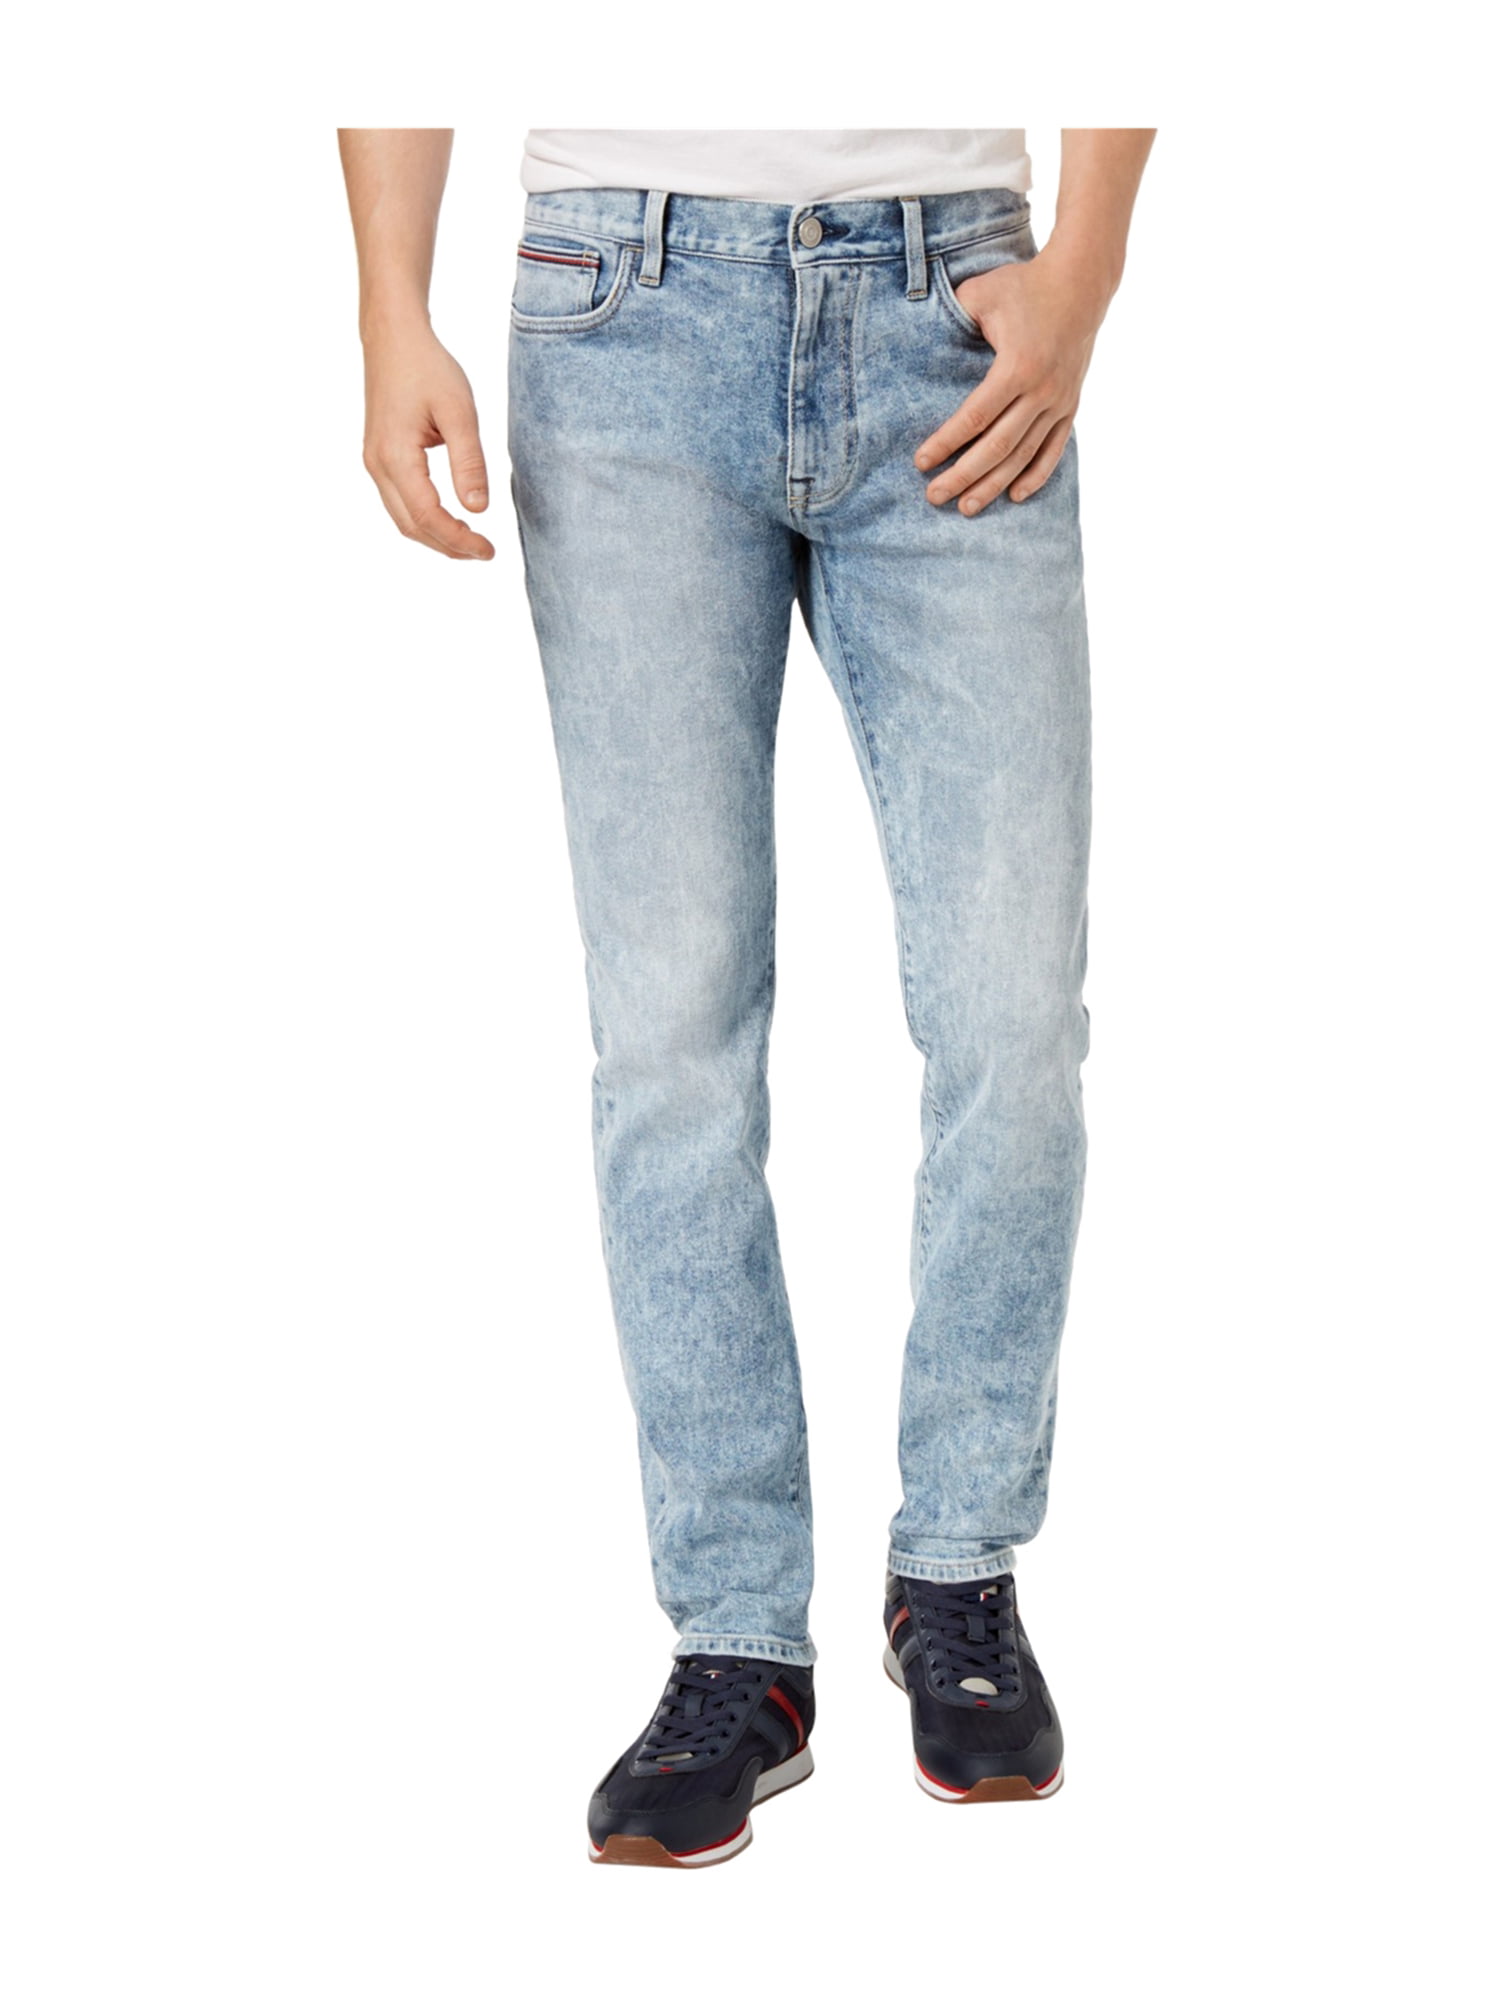 Tommy Hilfiger Mens Acid Wash Slim Fit Jeans 405 40x34 | Walmart Canada